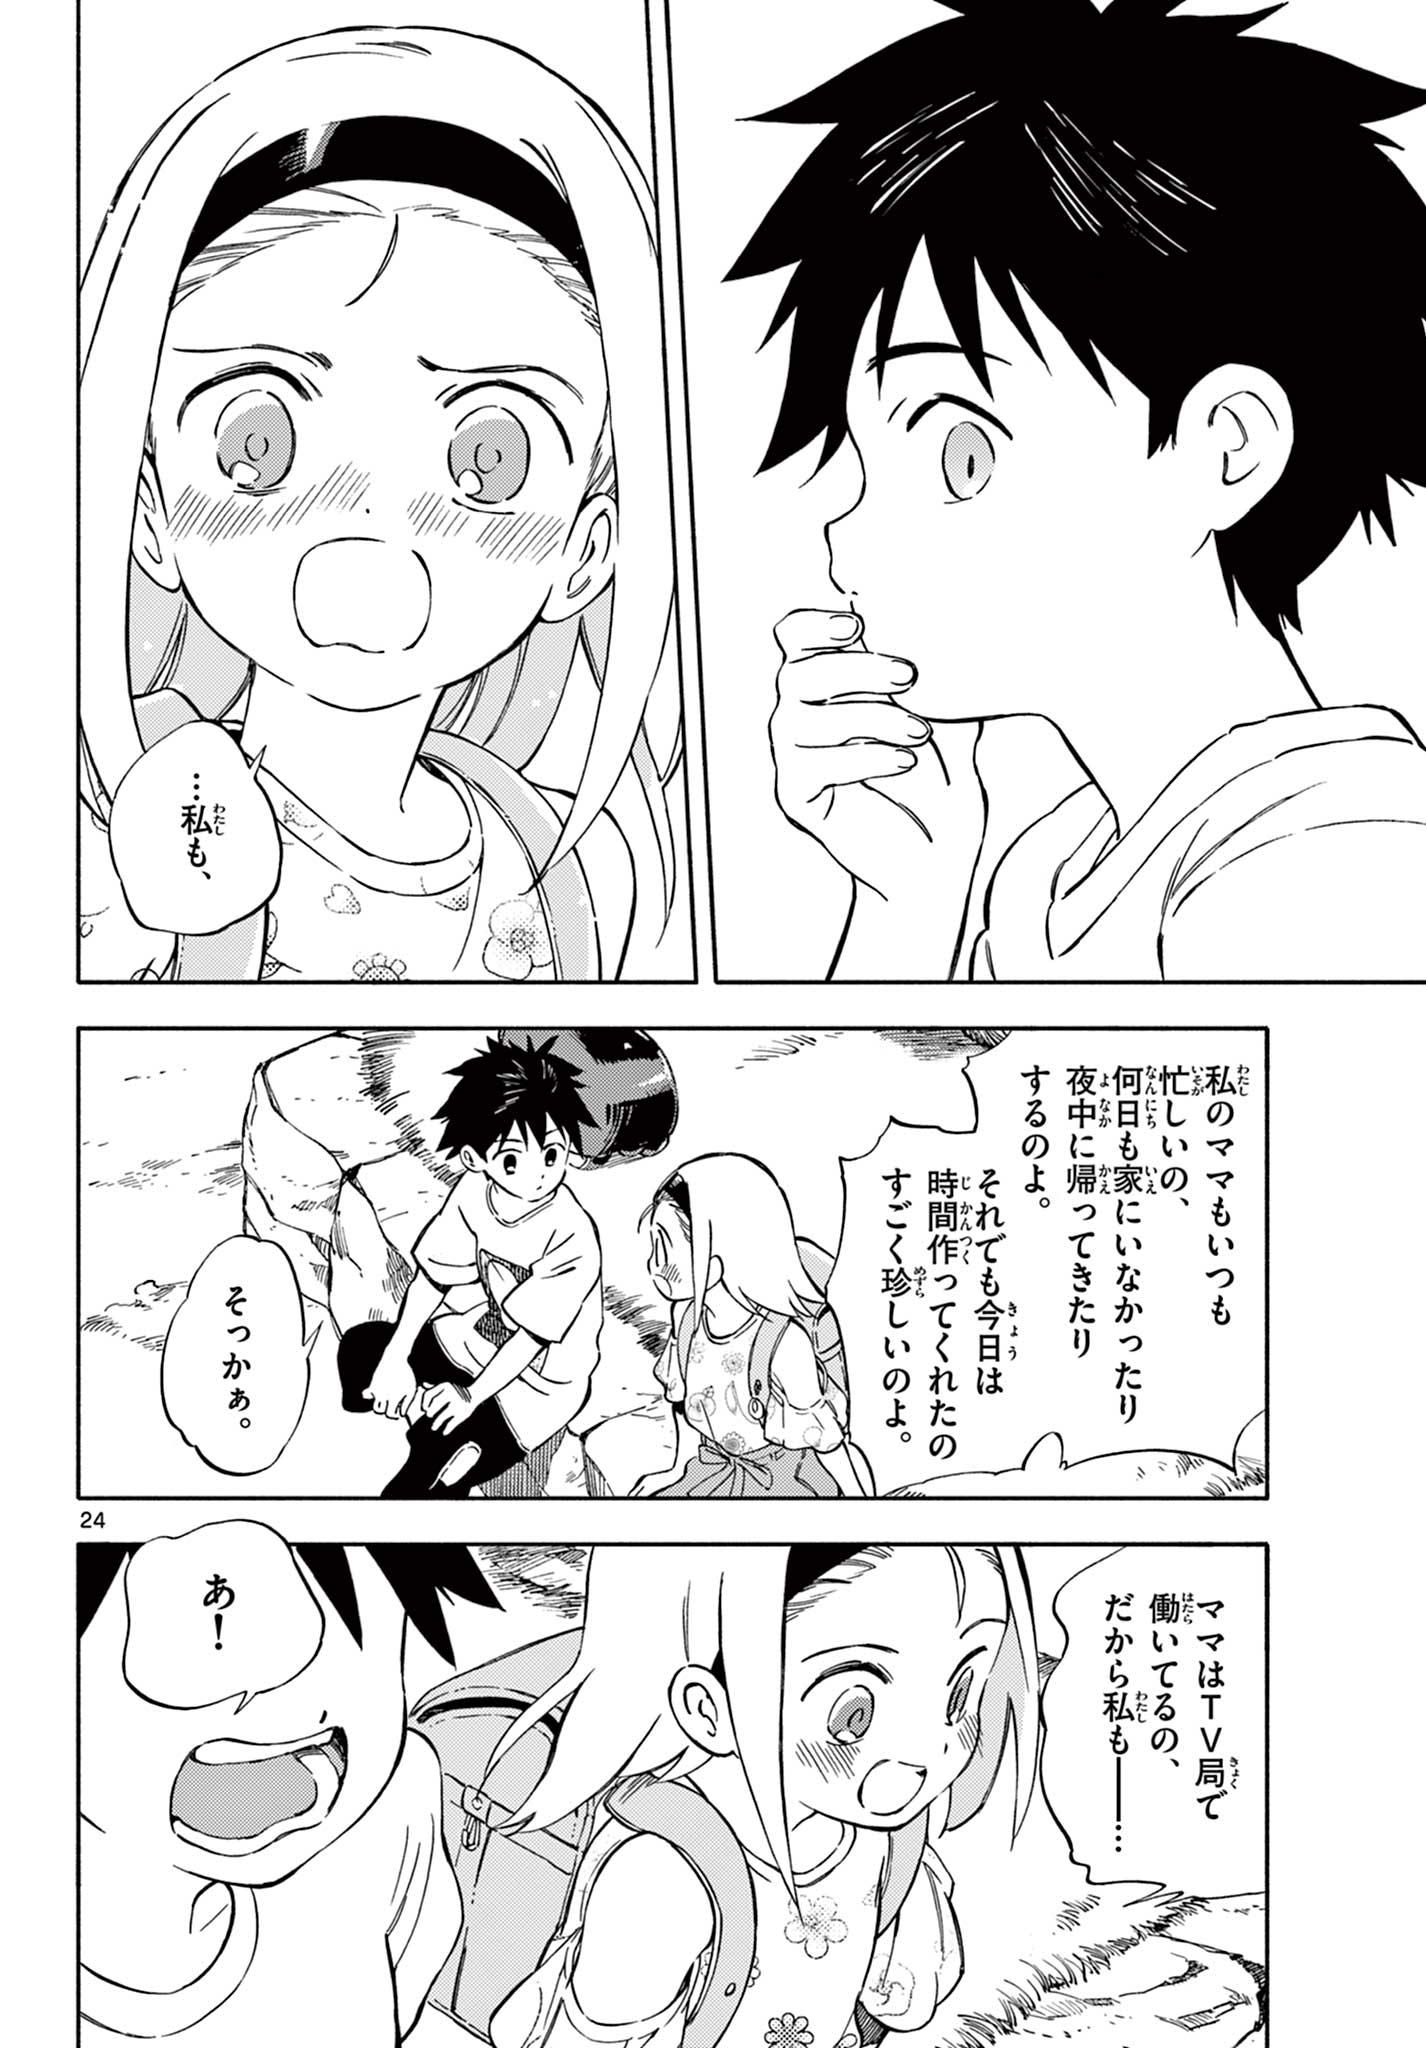 Nami no Shijima no Horizont - Chapter 8.2 - Page 10